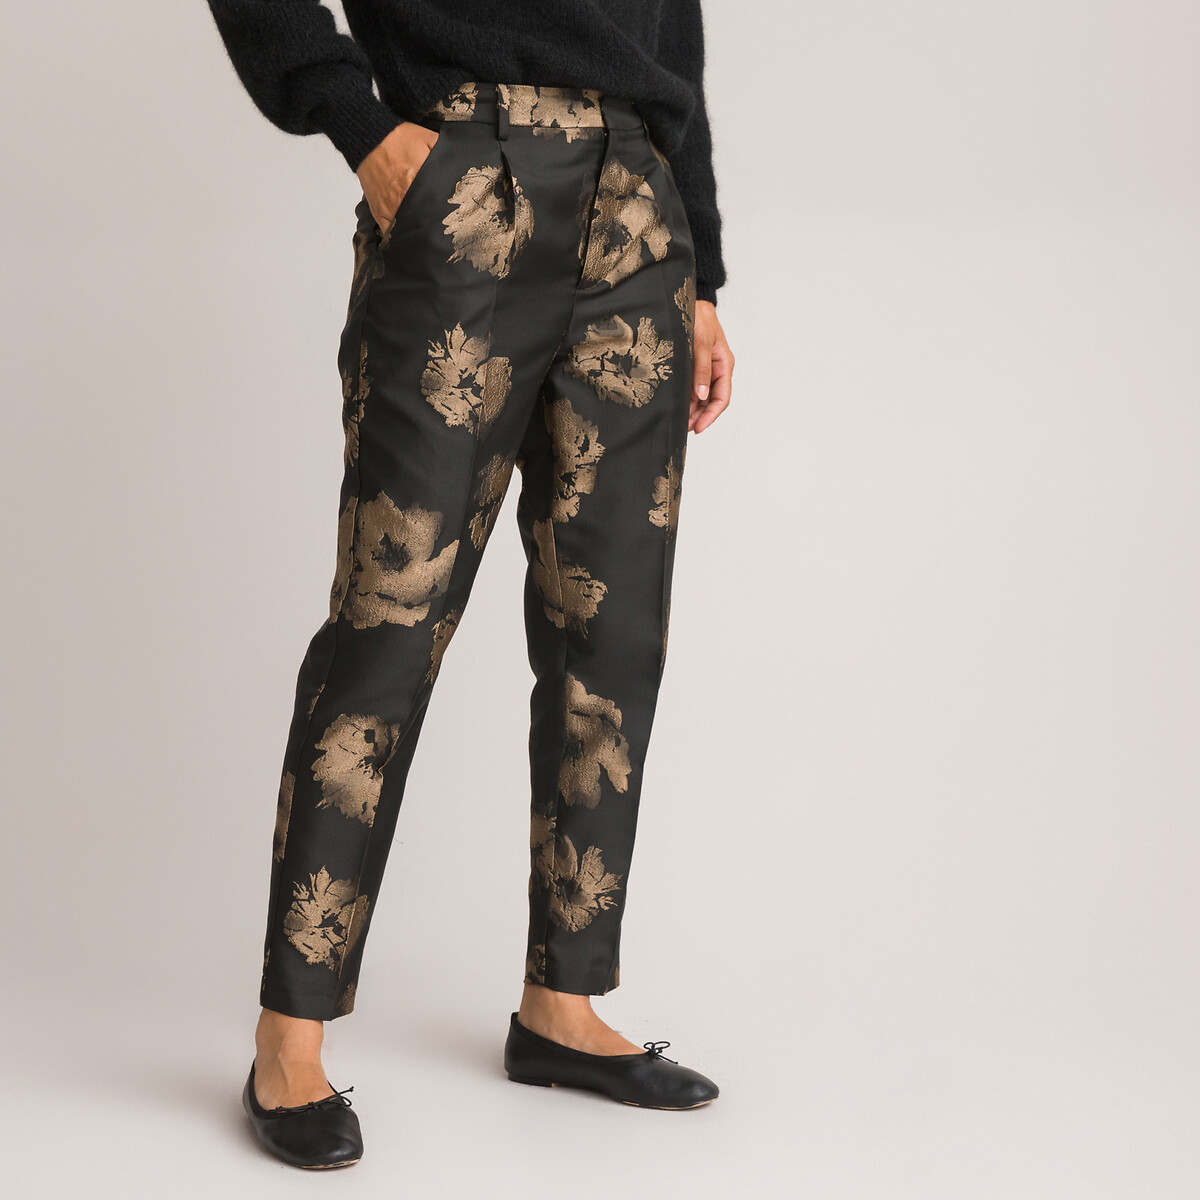 Fluid black cigarette pants with floral print B35 Color Black Tailles SM   OKKO MODE